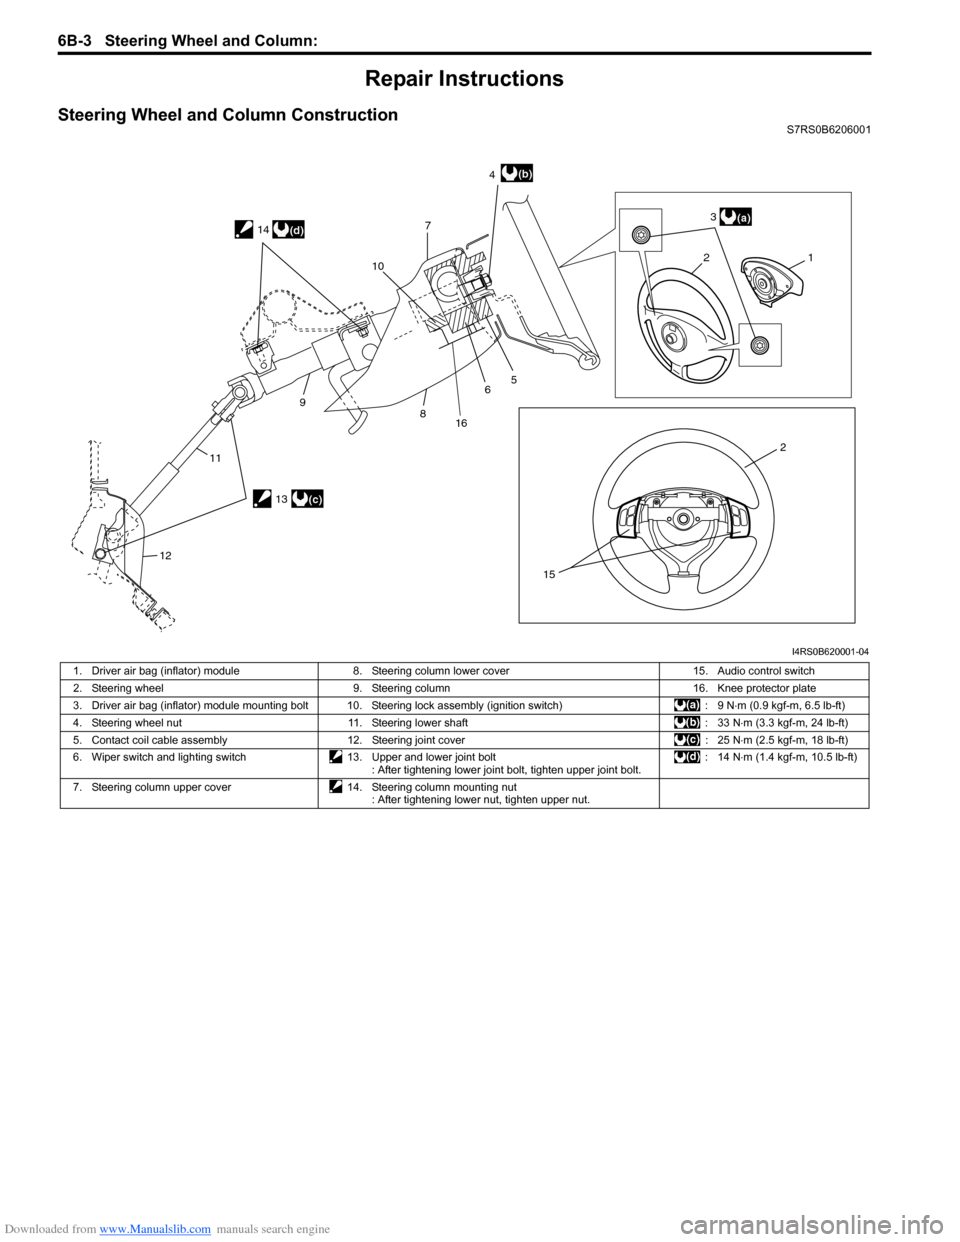 SUZUKI SWIFT 2008 2.G Service Workshop Manual Downloaded from www.Manualslib.com manuals search engine 6B-3 Steering Wheel and Column: 
Repair Instructions
Steering Wheel and Column ConstructionS7RS0B6206001
21
2 3
4
7
5
6
8
9
11
12 10
15
(a)
(b)